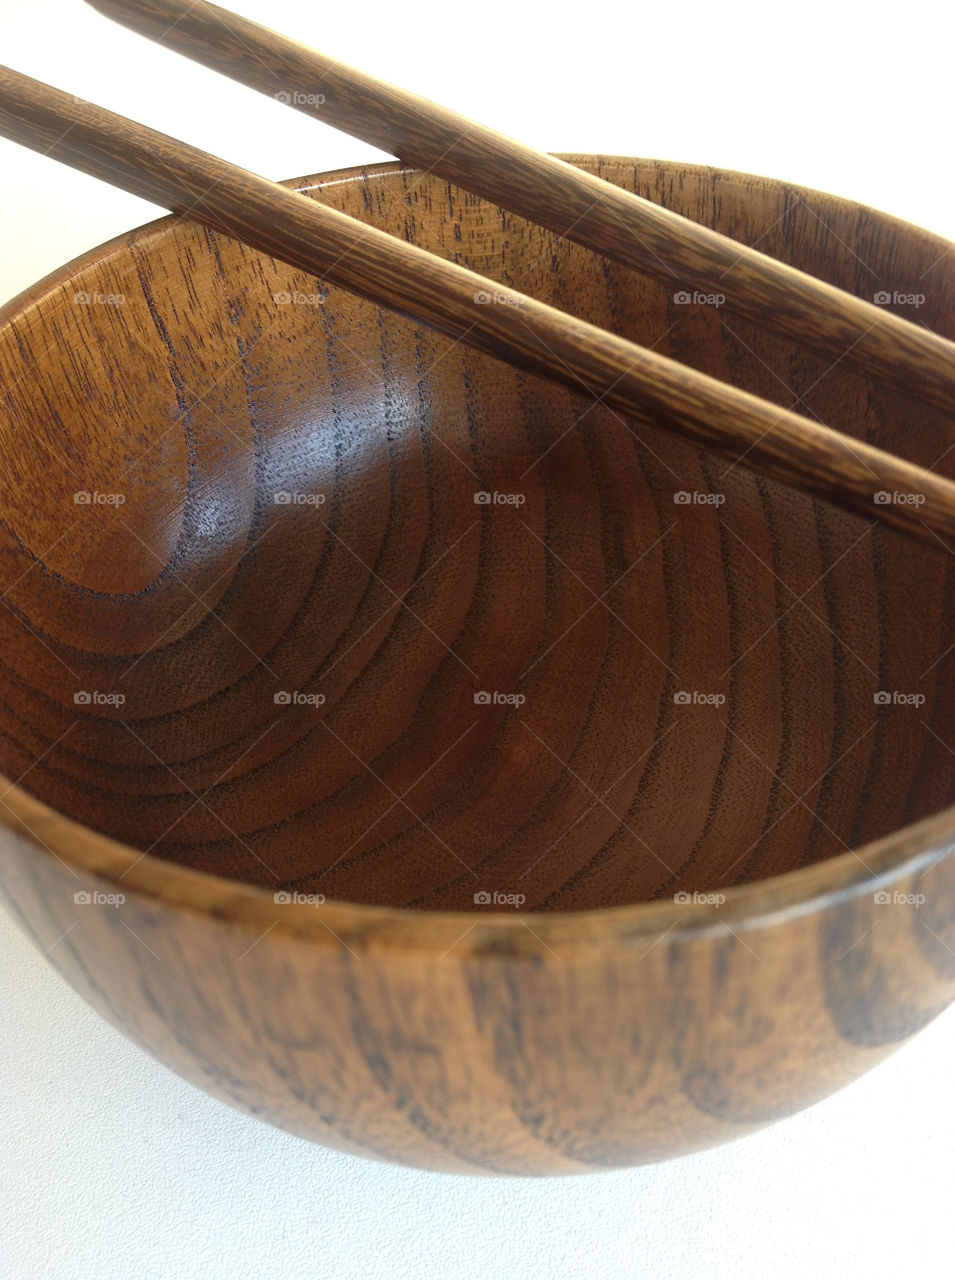 italy food wood bowl by fie_r_w